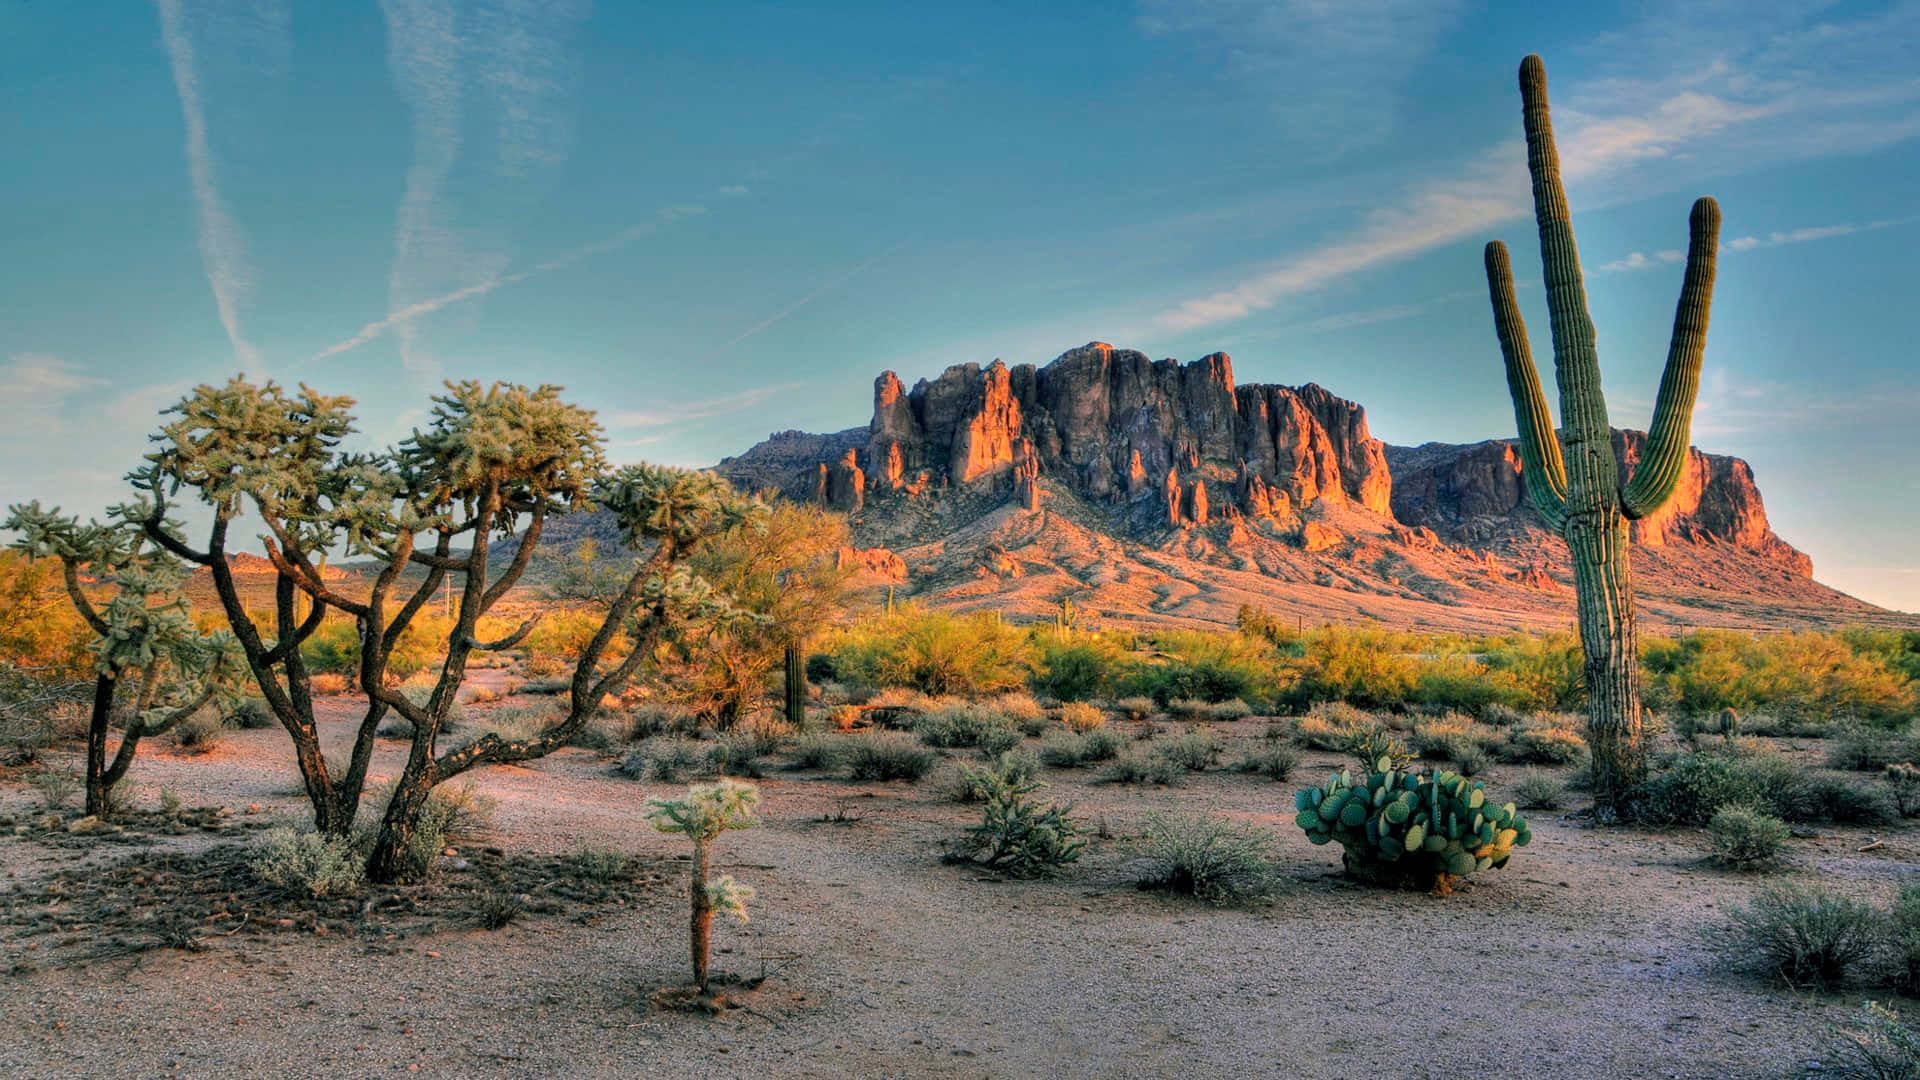 Admire the Sonoran Desert in Arizona